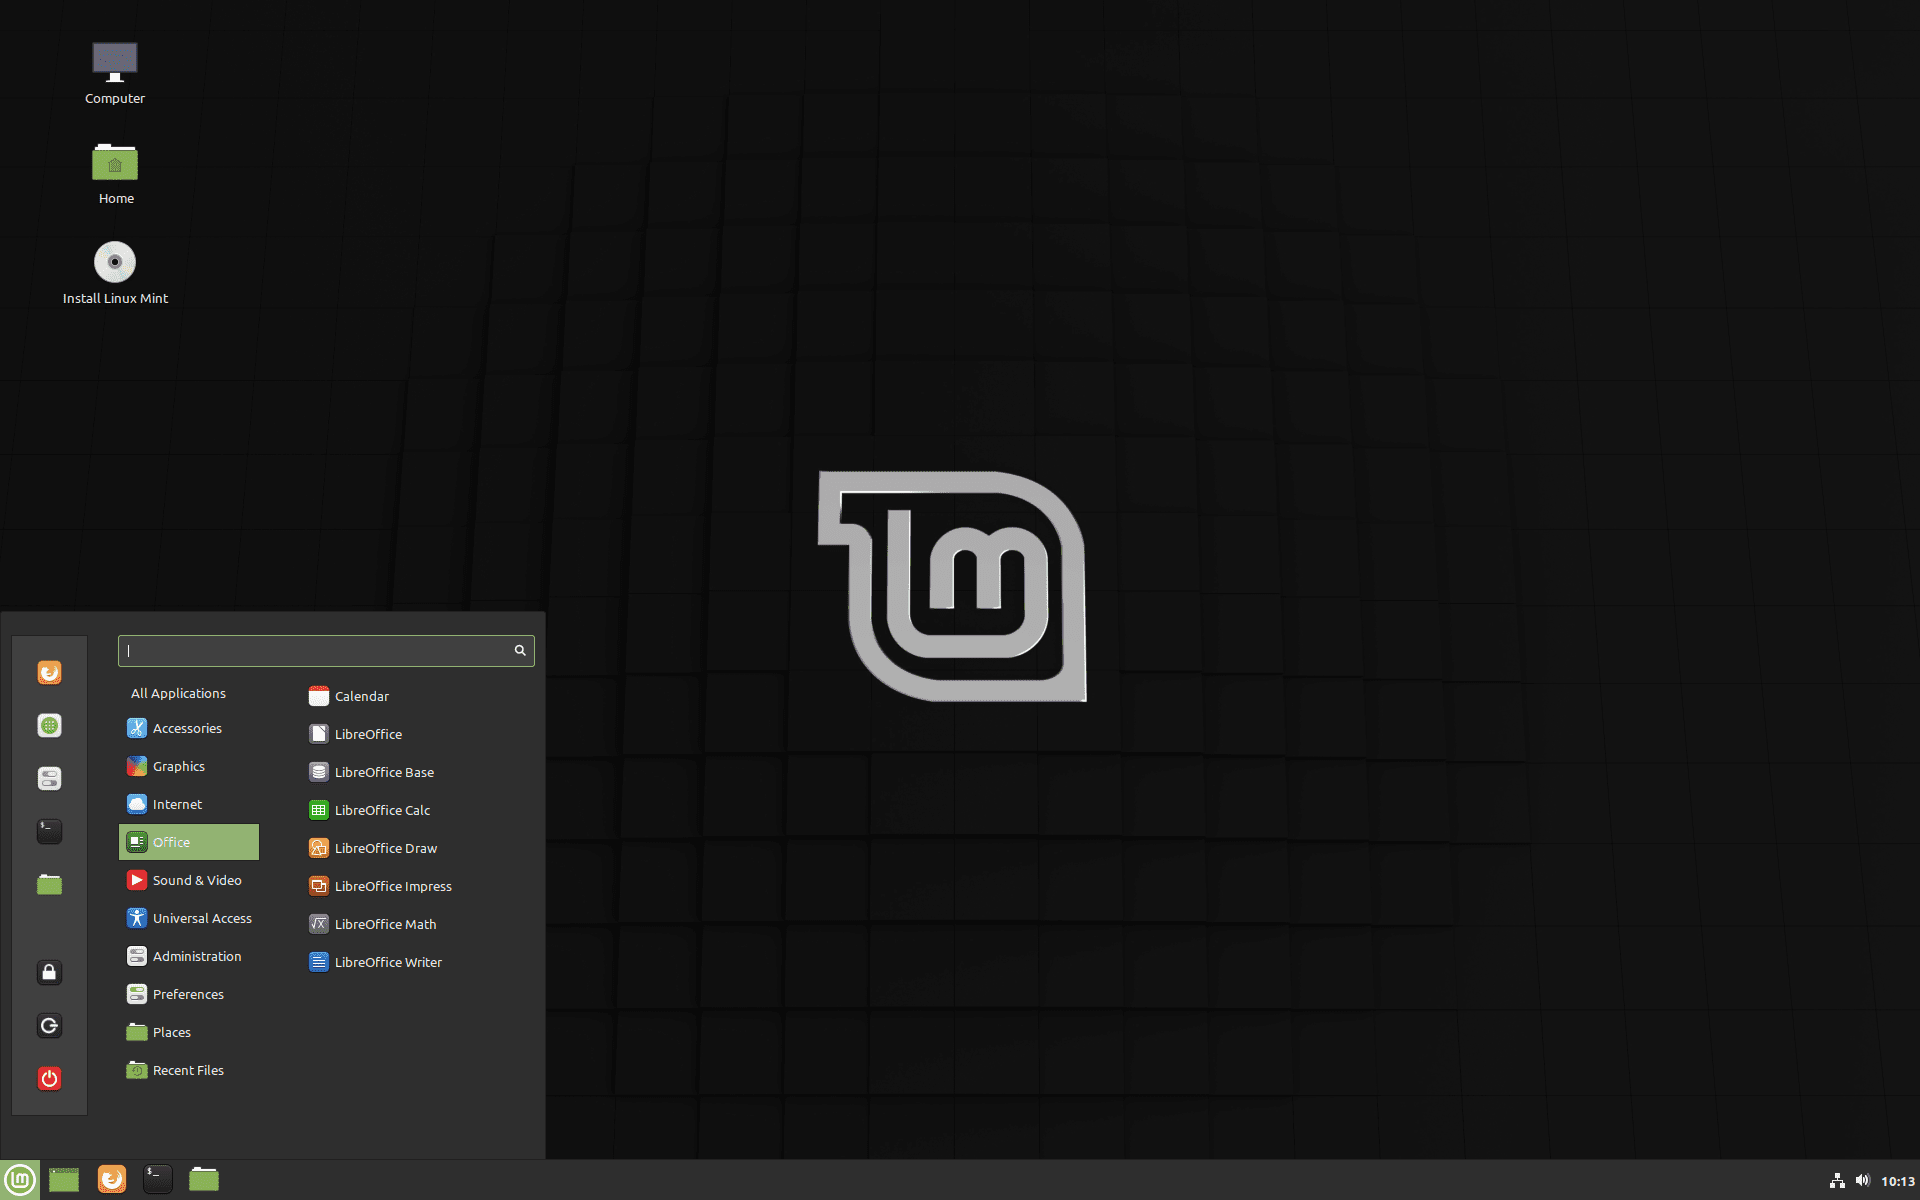 Interfaz predeterminada de Linux Mint